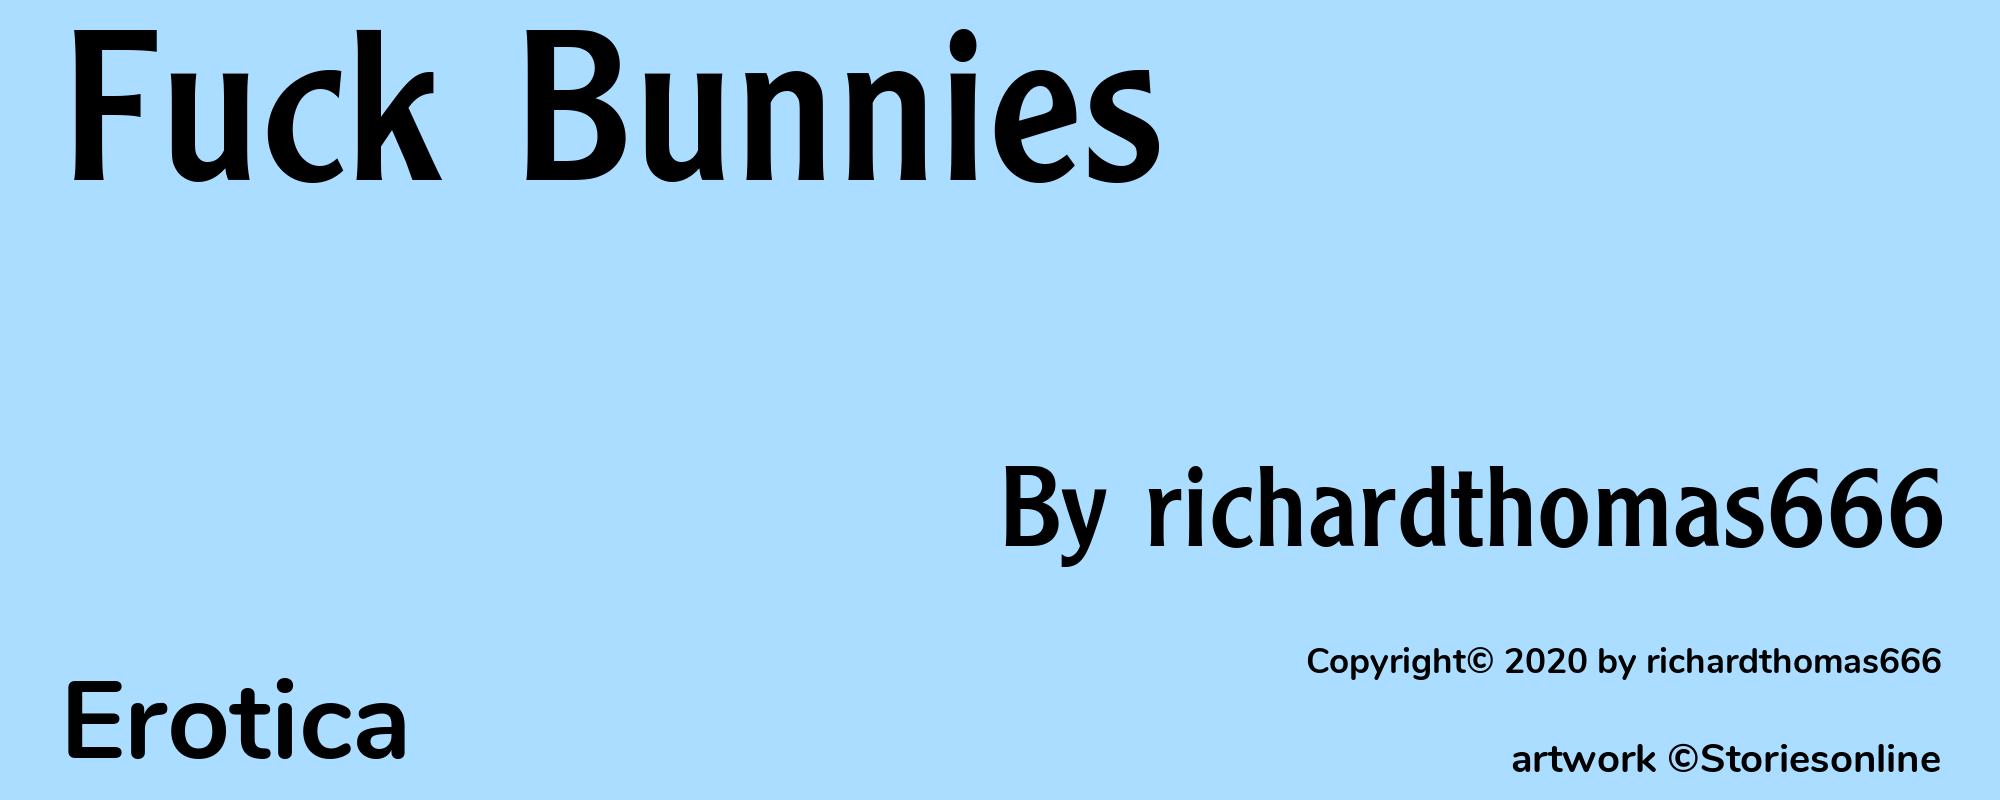 Fuck Bunnies - Cover